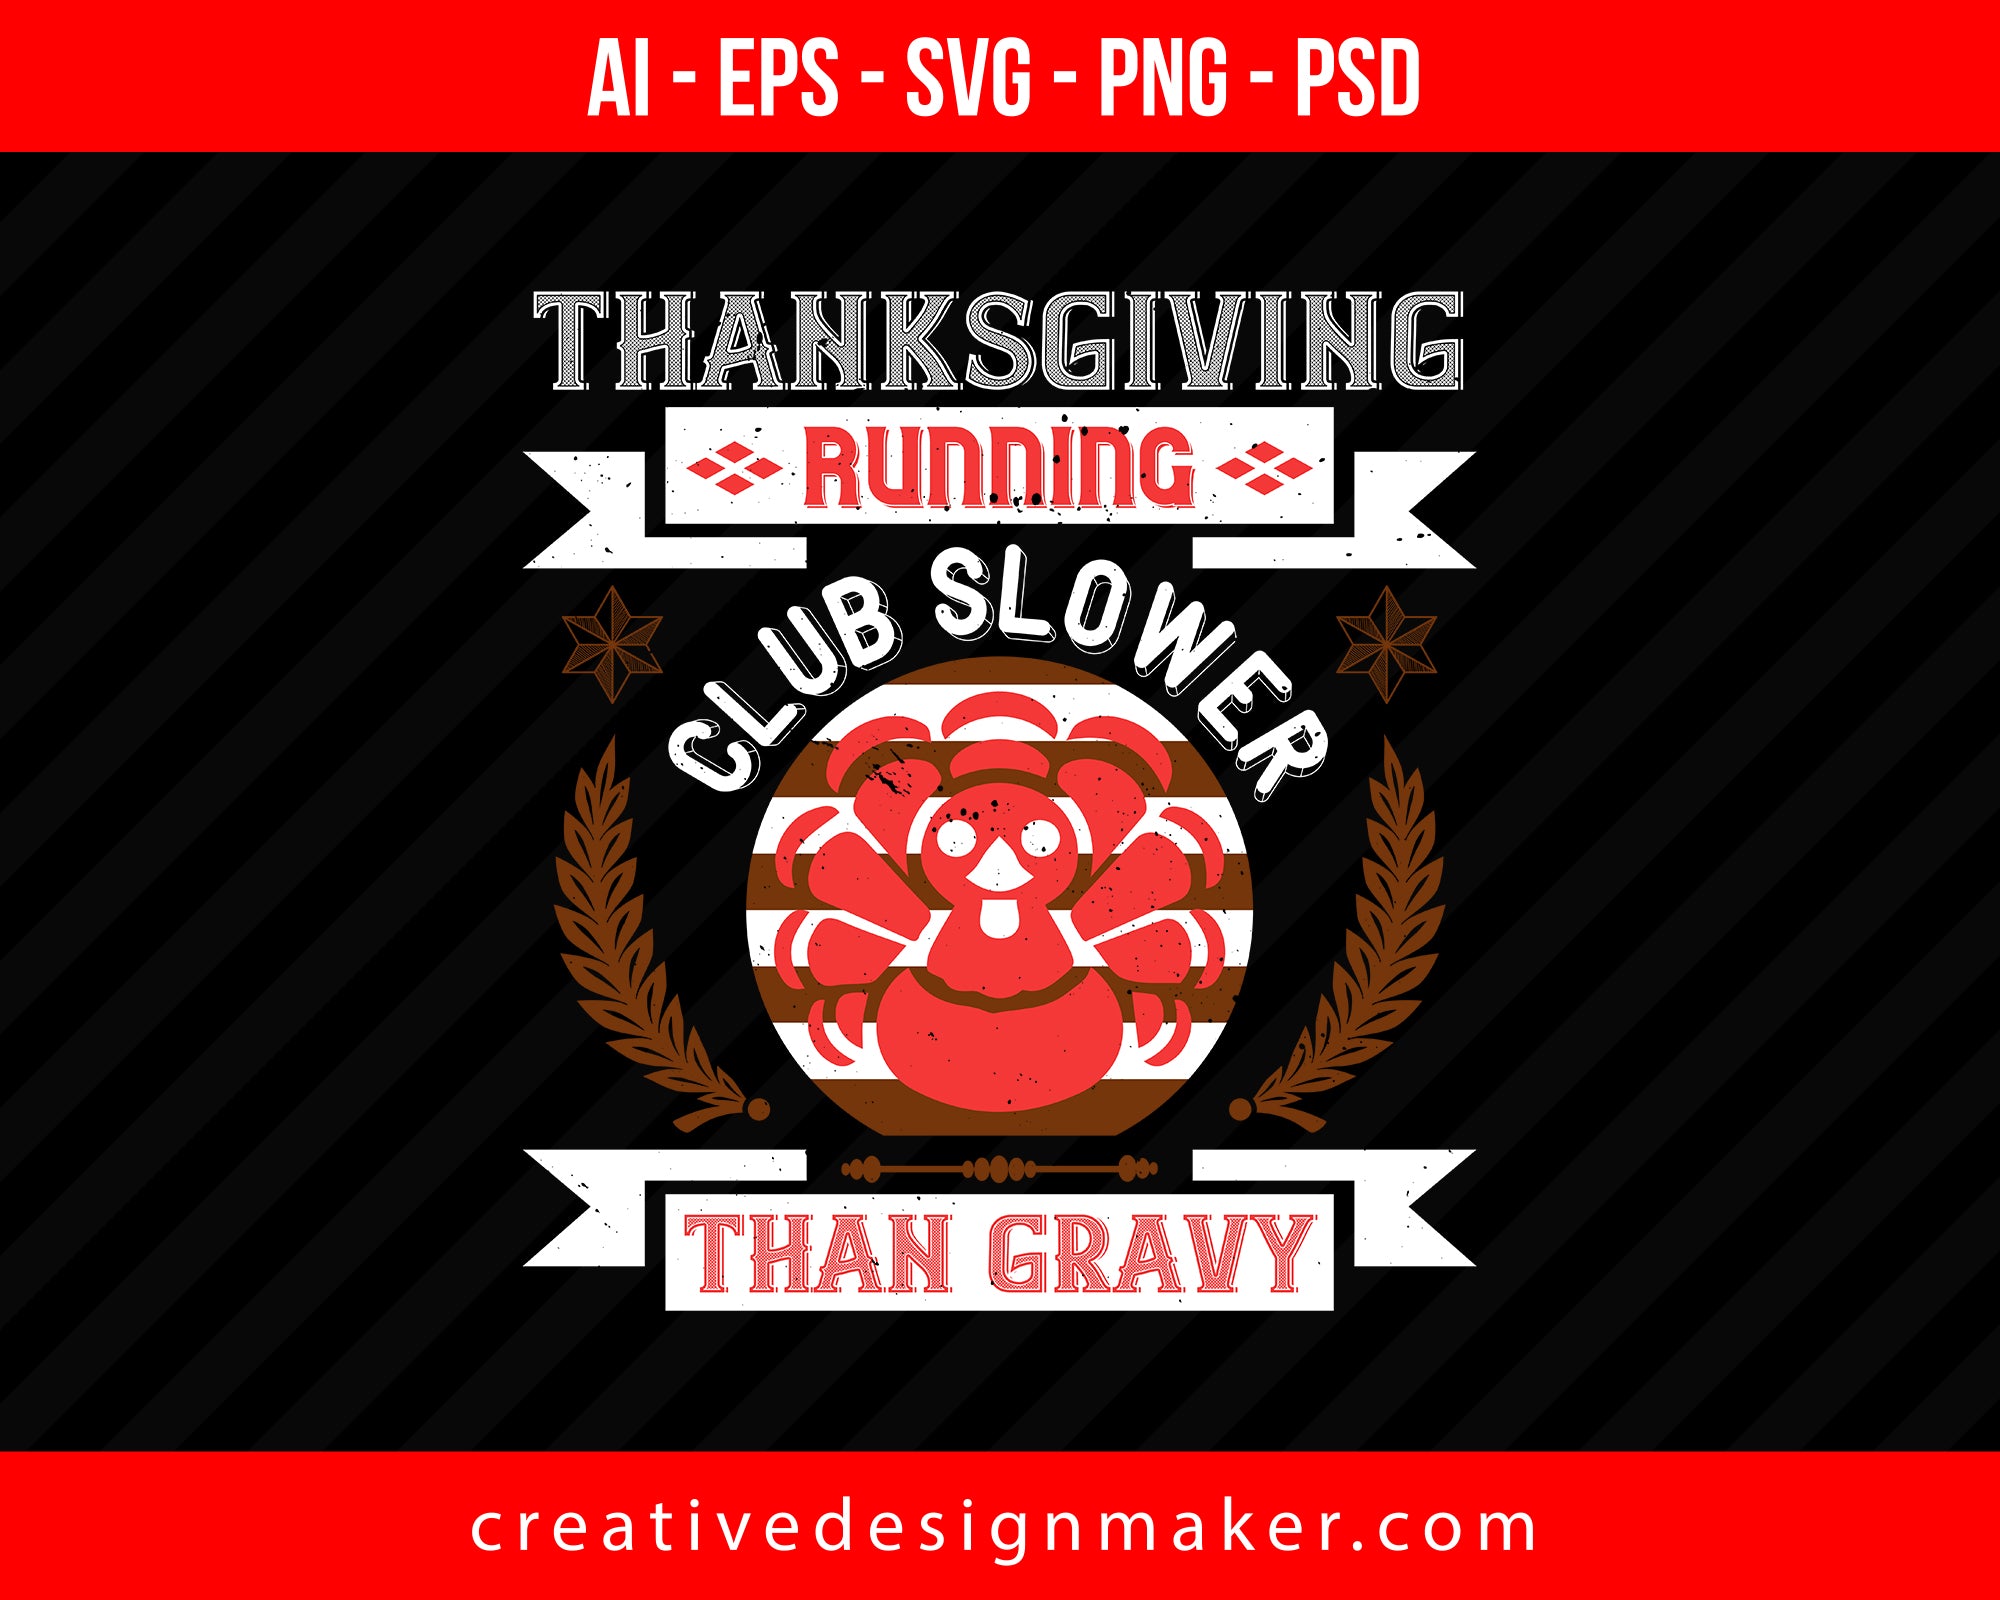 Thanksgiving running club slowea than gravy Print Ready Editable T-Shirt SVG Design!